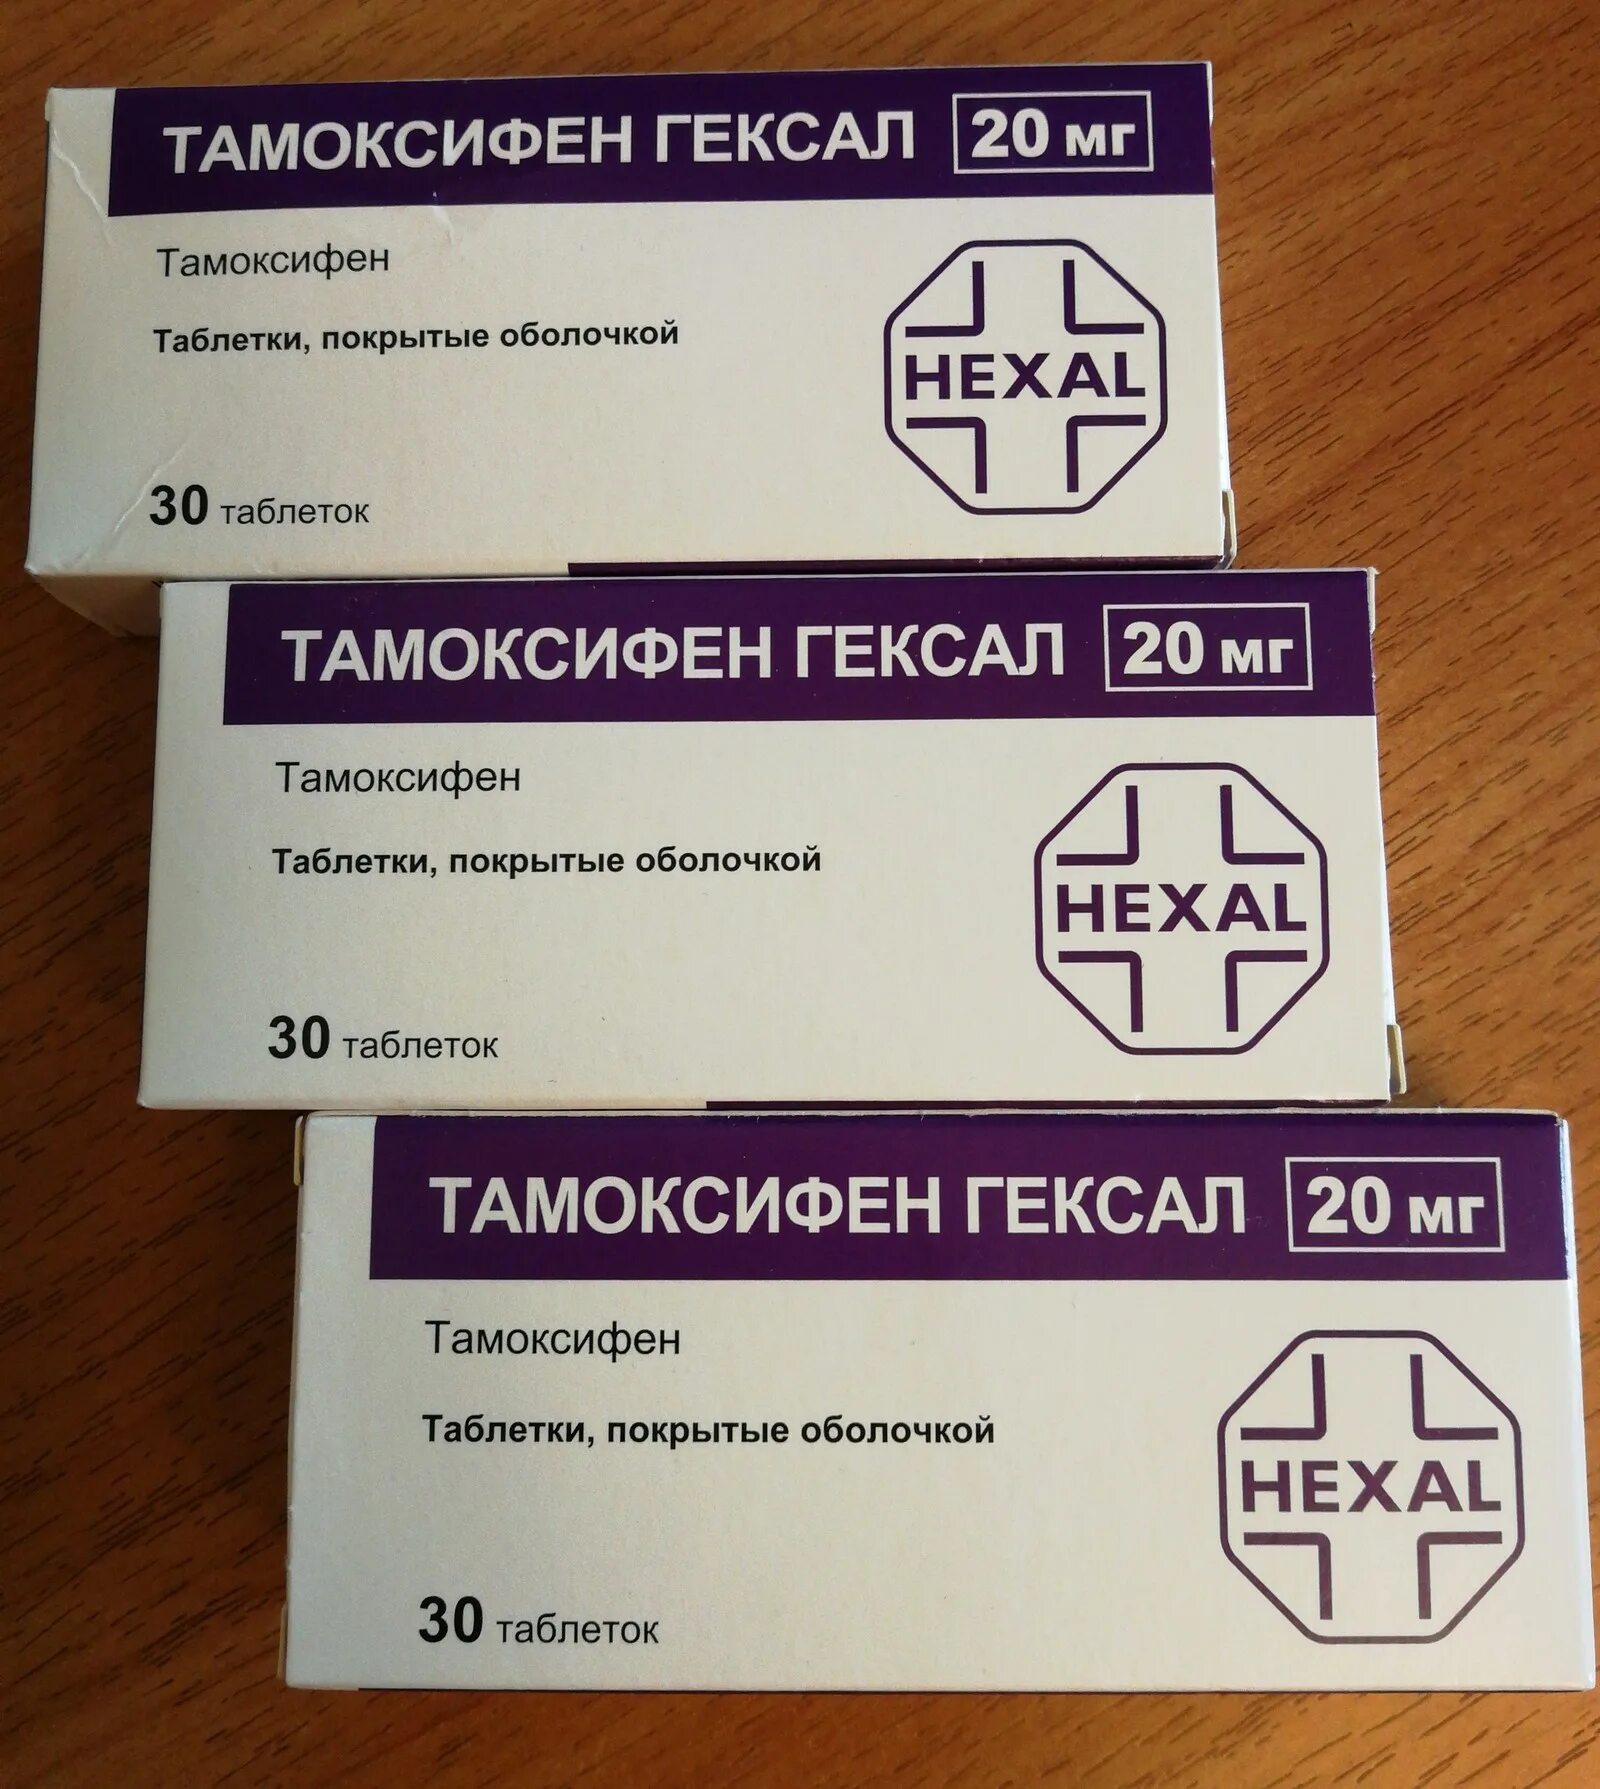 Тамоксифен таблетки 20 мг. Препарат Тамоксифен 20 мг производитель Германия. Тамоксифен гексал 20 мг Тамоксифен. Тамоксифен Финляндия 100 таб.